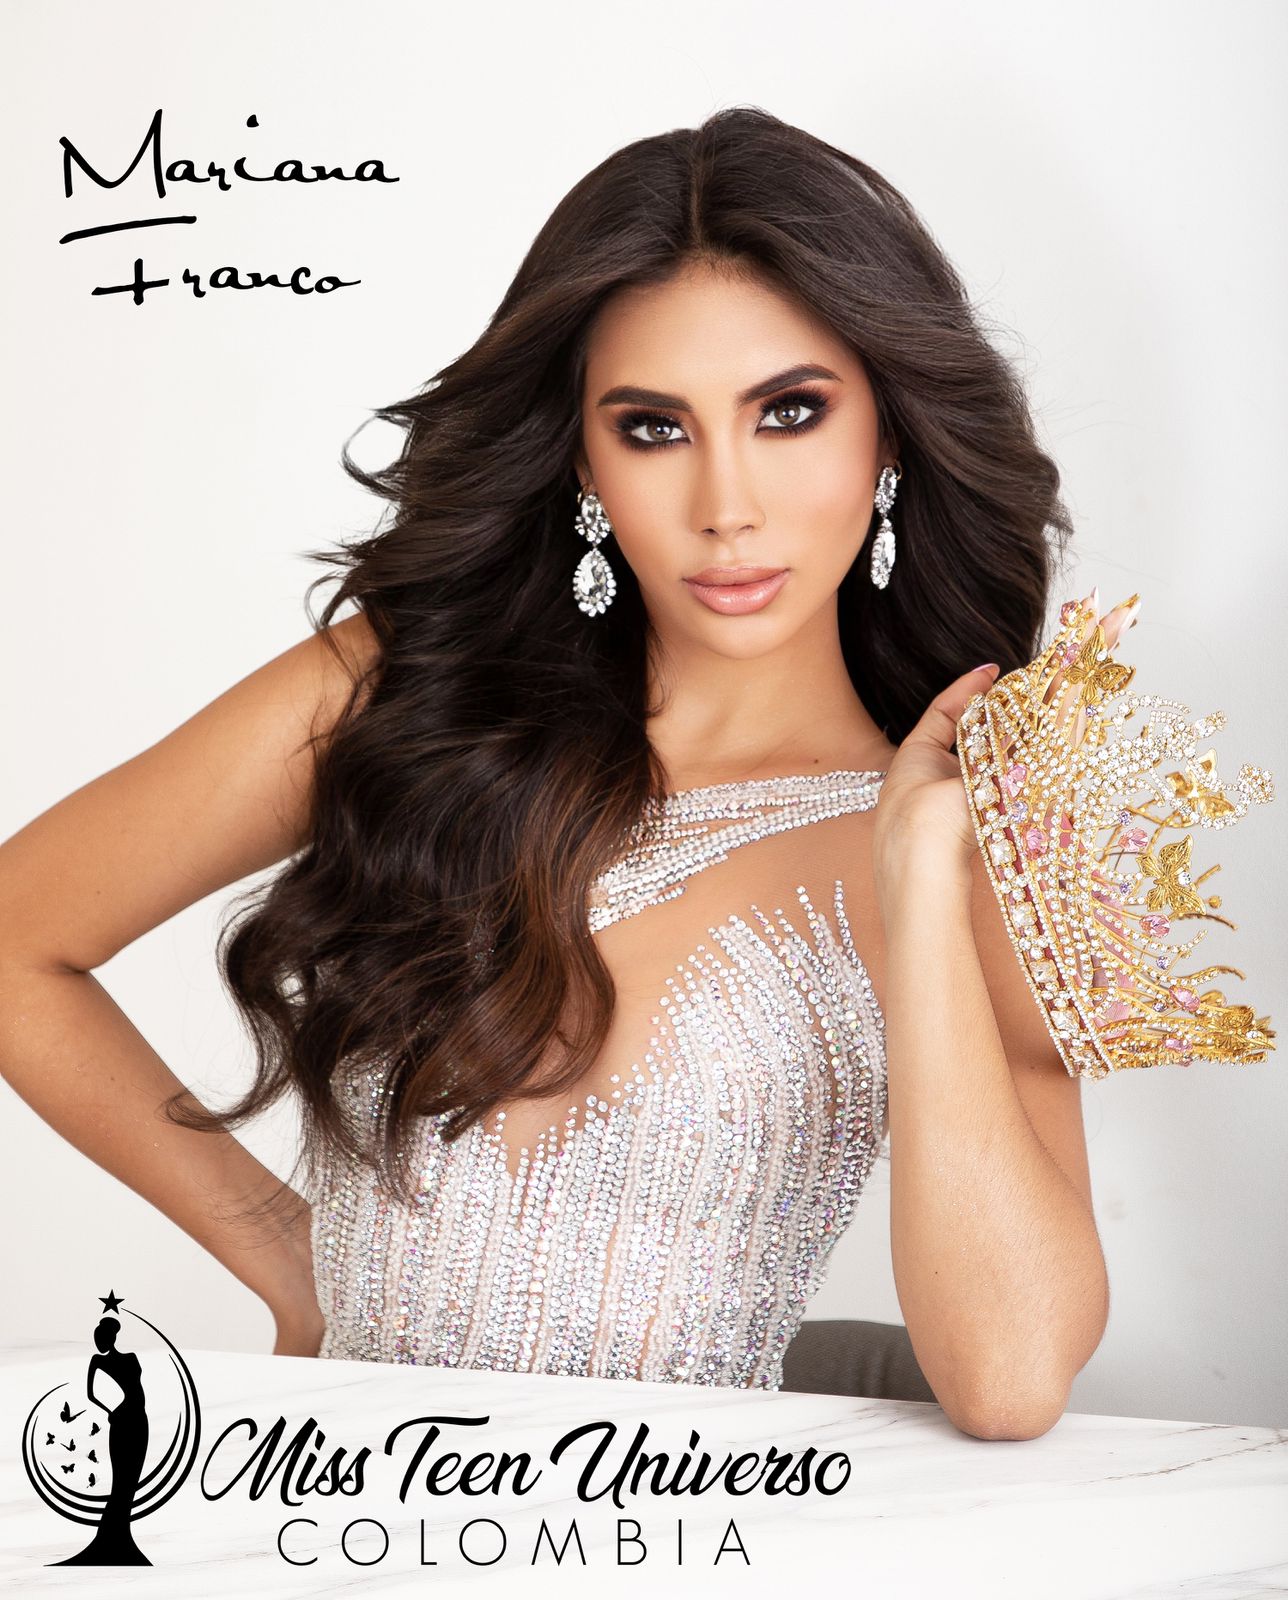 Barranquilla se engalana para recibir el Miss Teen Universe Colombia 2024